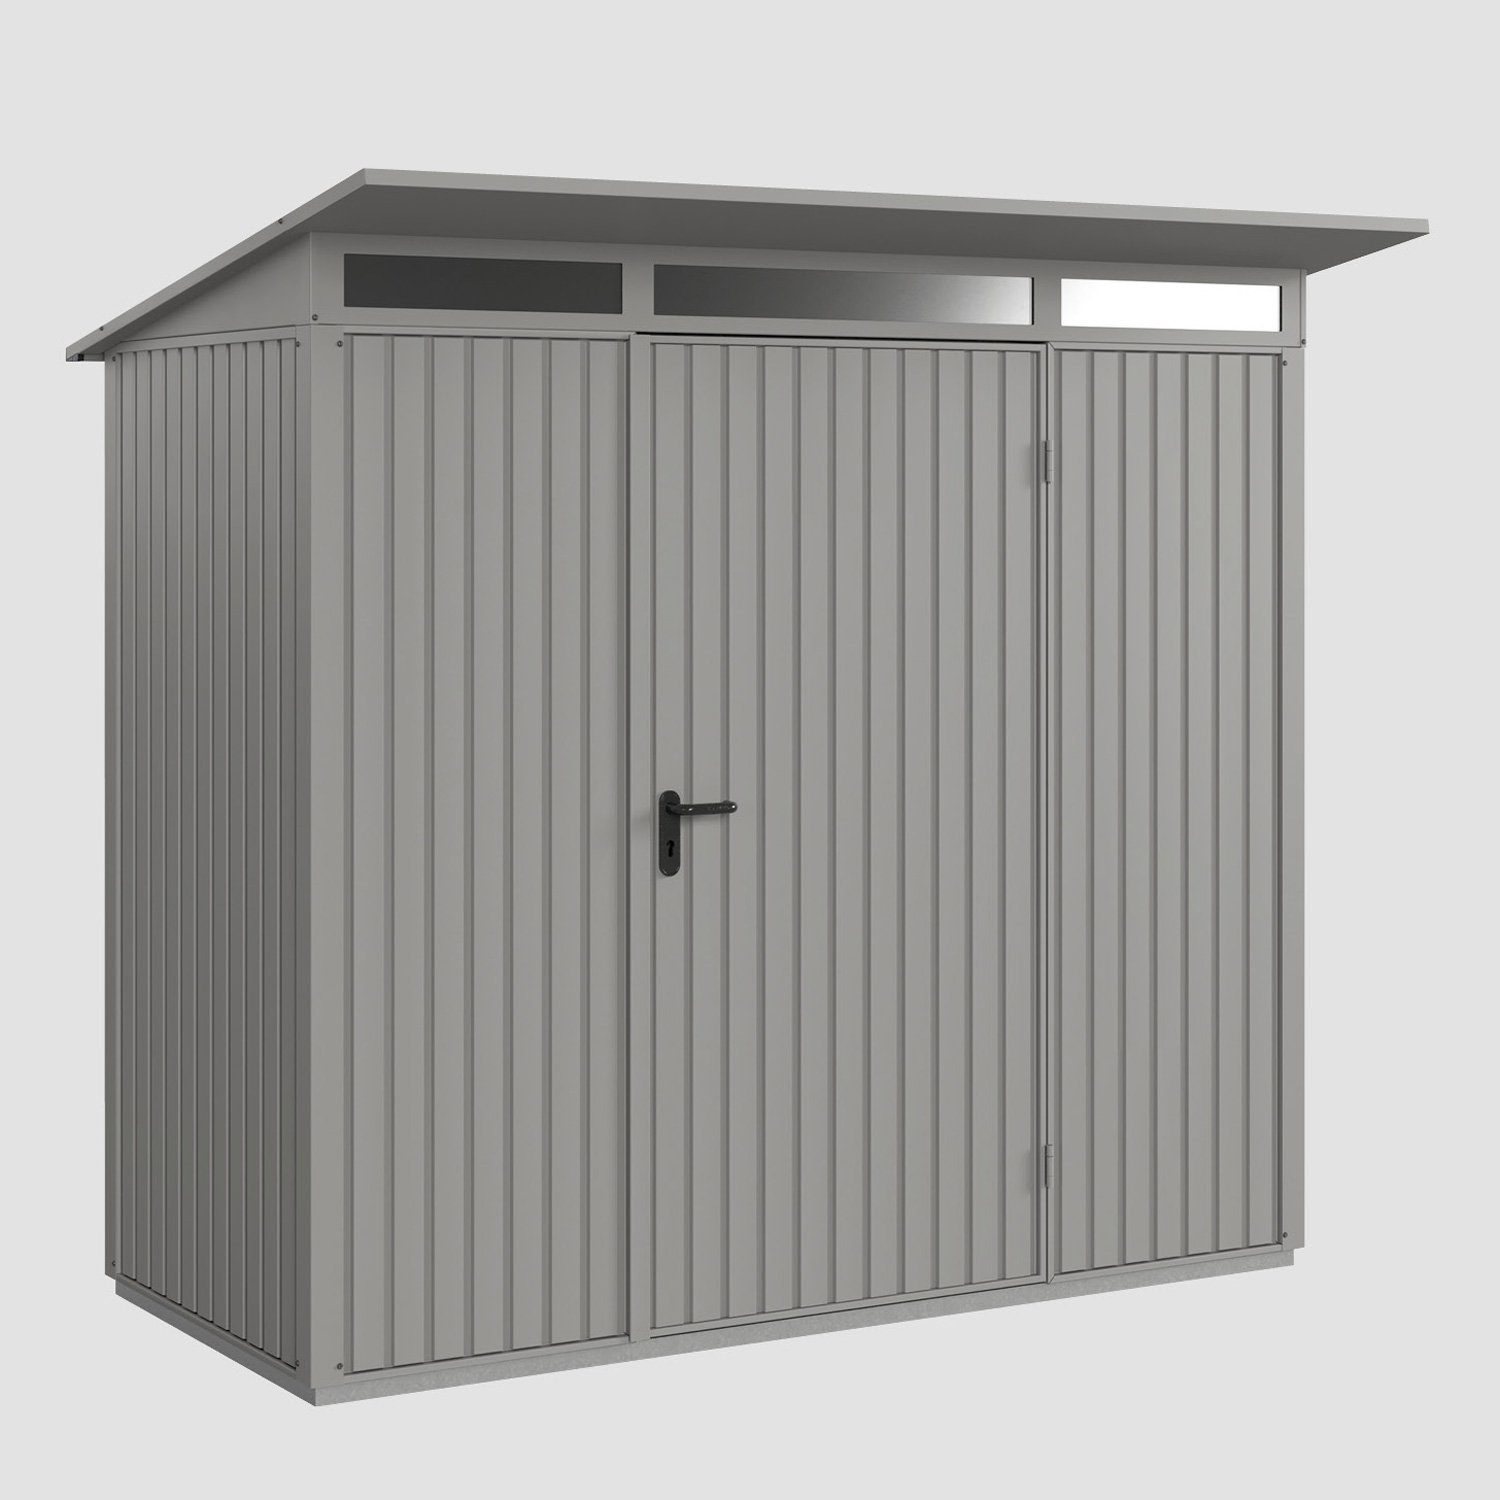 Hörmann Ecostar Gerätehaus Metall-Gerätehaus Trend mit Pultdach Typ 1, 1-flüglige Tür graualuminium | Geräteschuppen